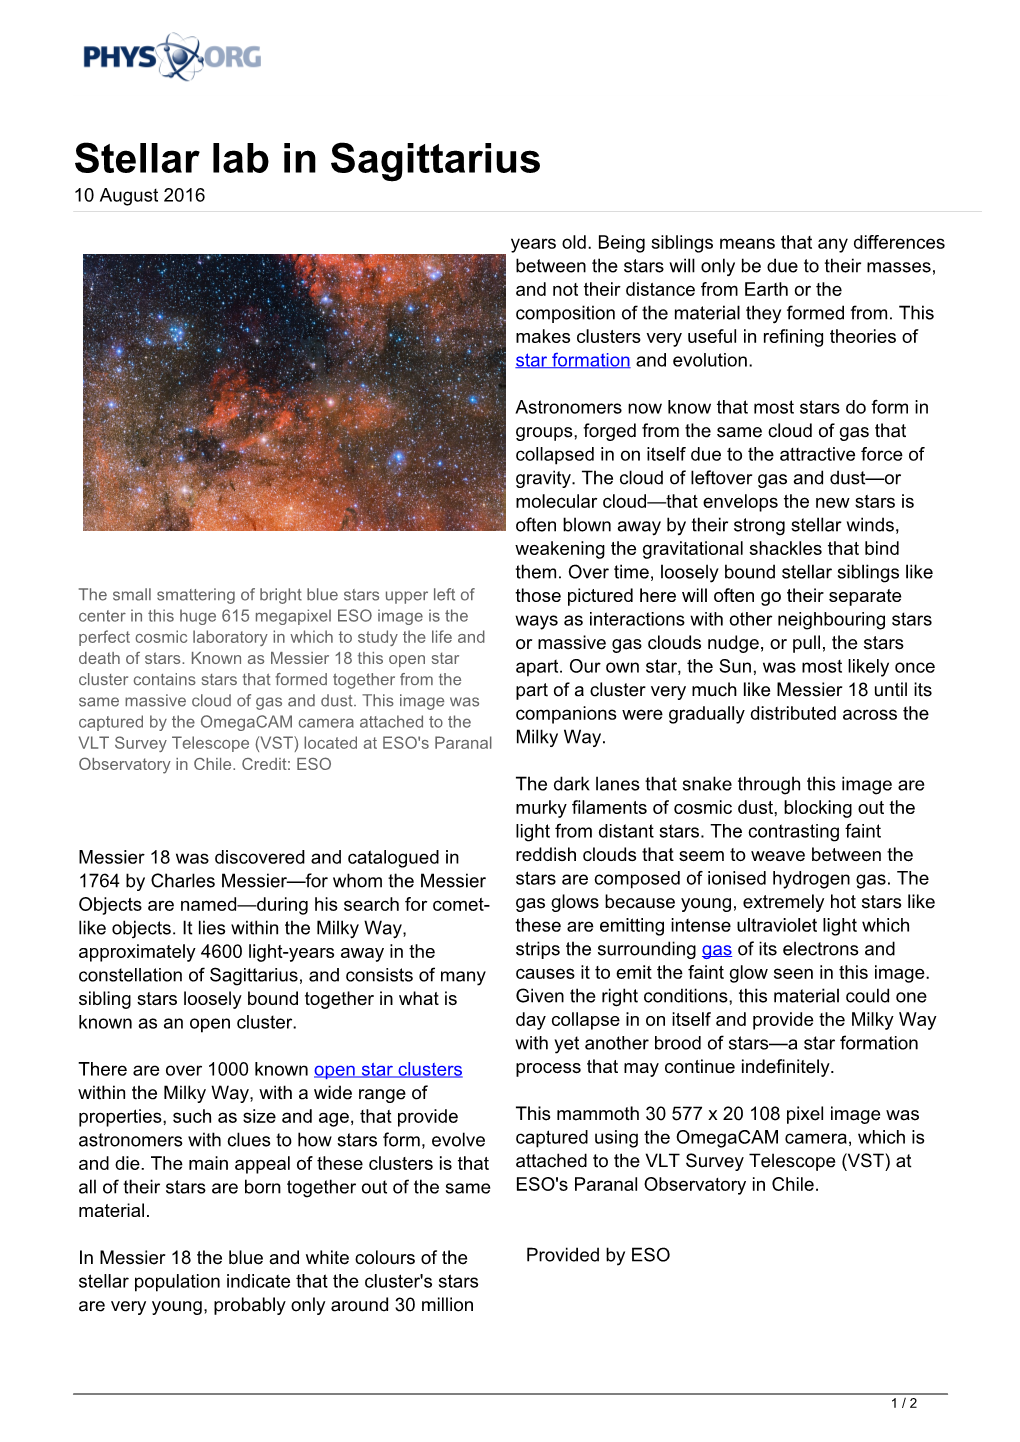 Stellar Lab in Sagittarius 10 August 2016